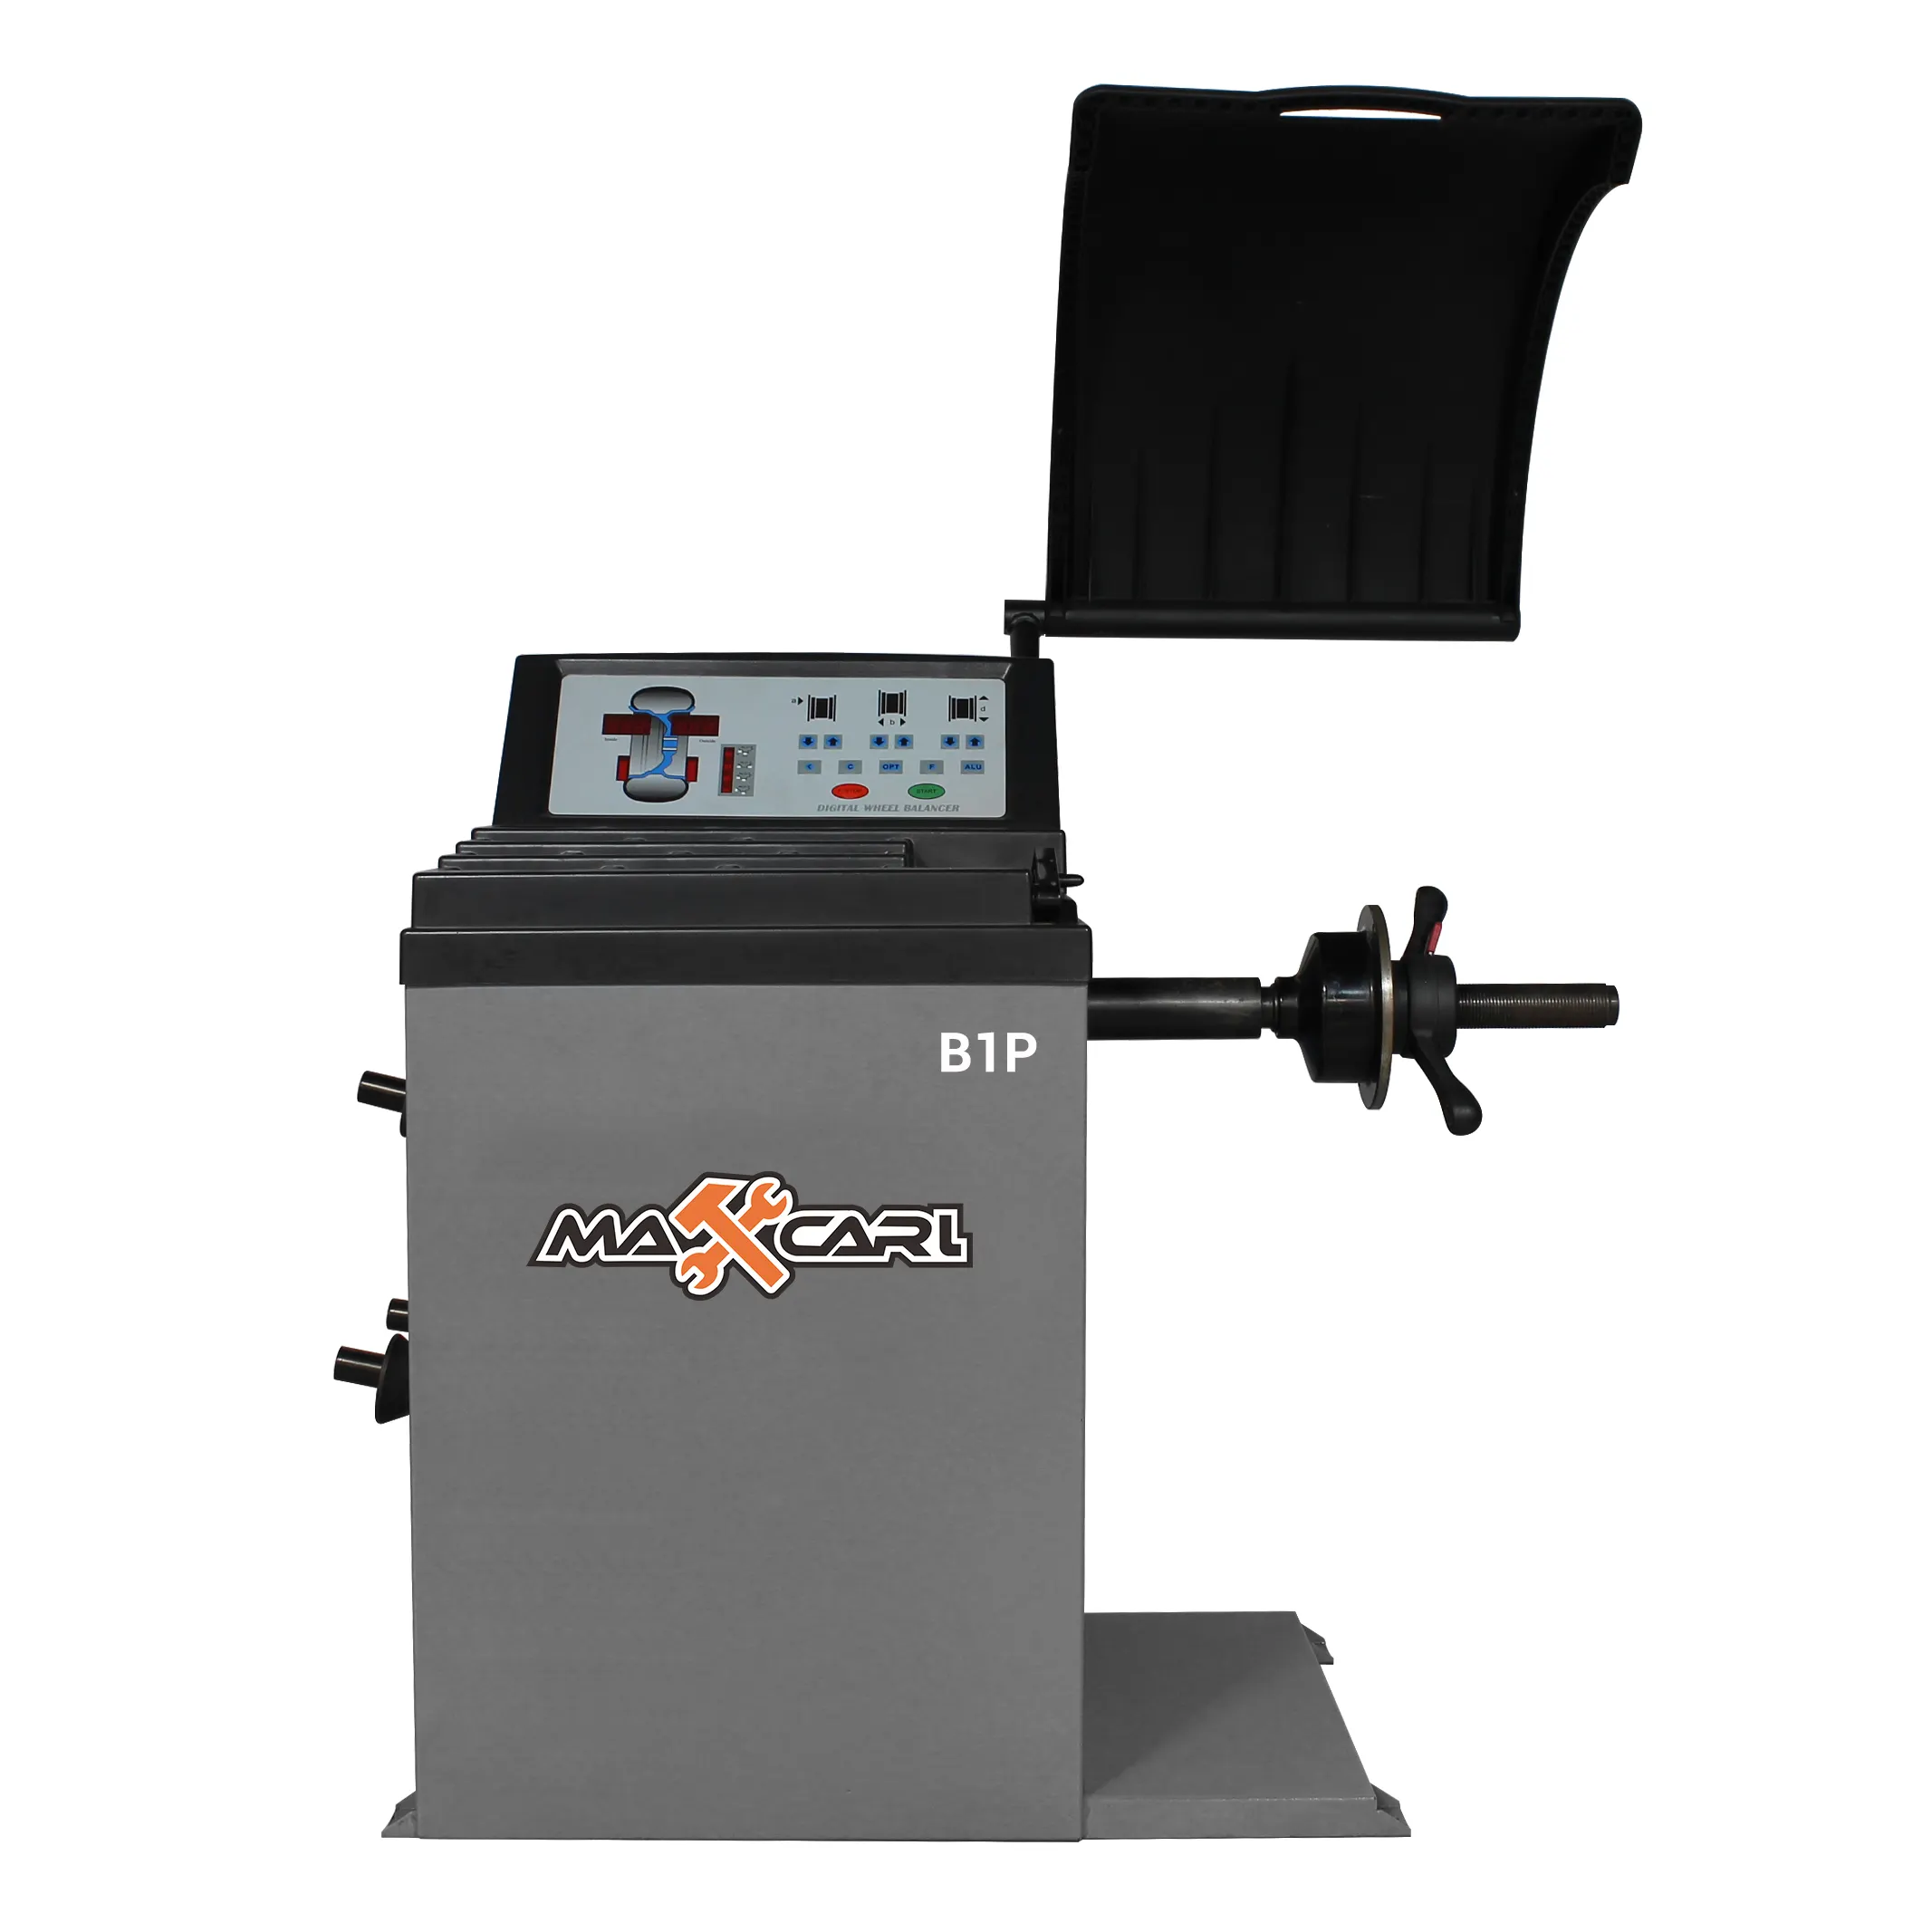 Wheel balance machine B1P dynamic and static modes balance function factory price